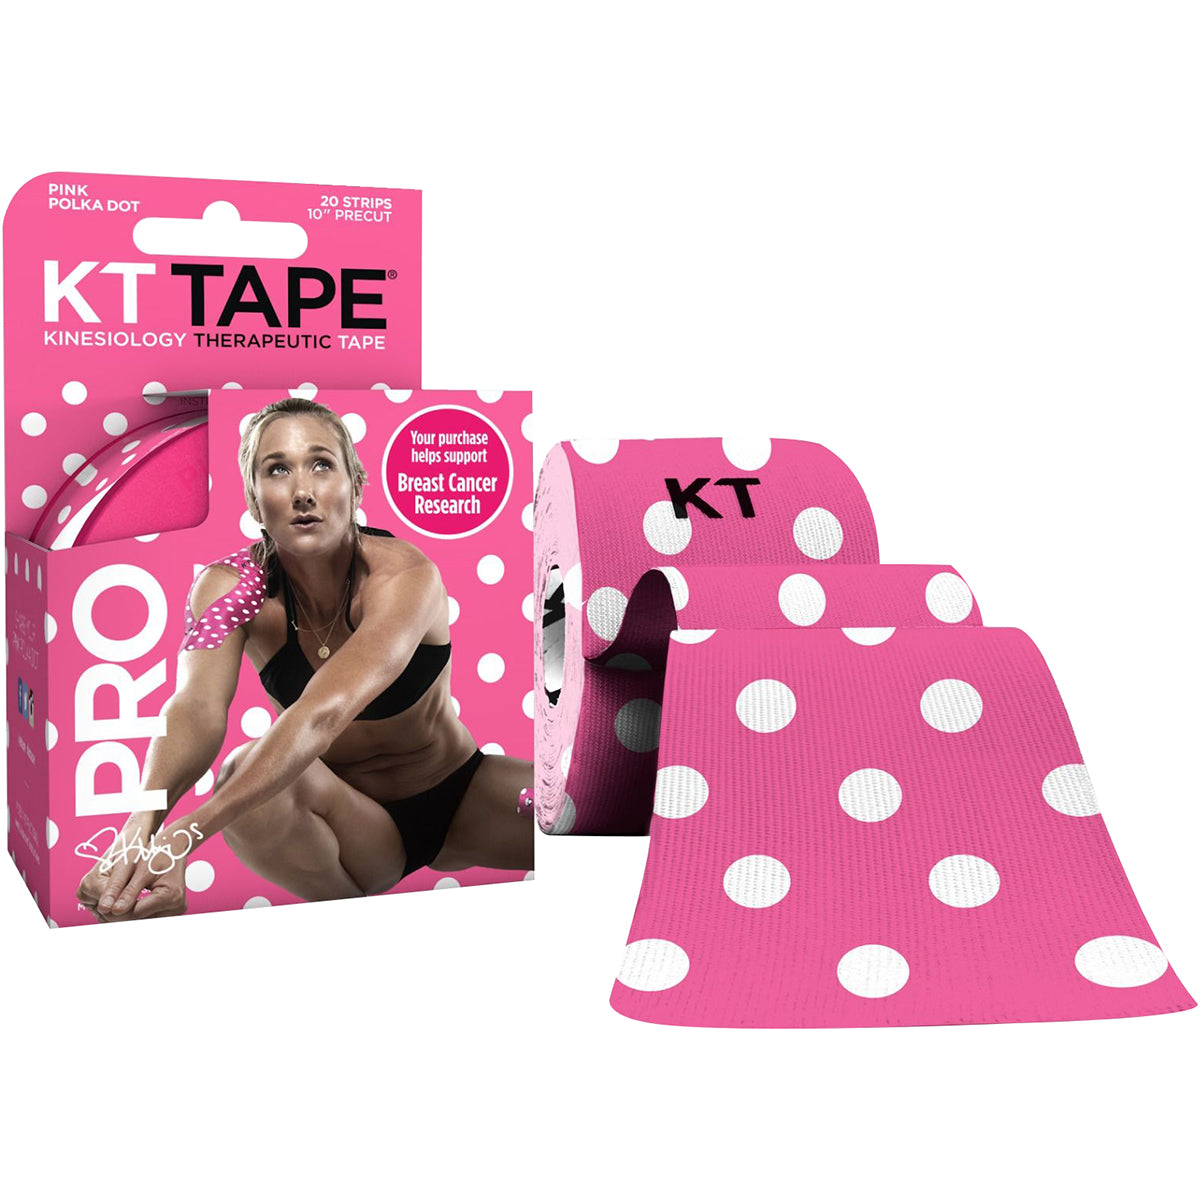 KT Tape Pro 10" Precut Kinesiology Therapeutic Elastic Sports Roll - 20 Strips KT Tape